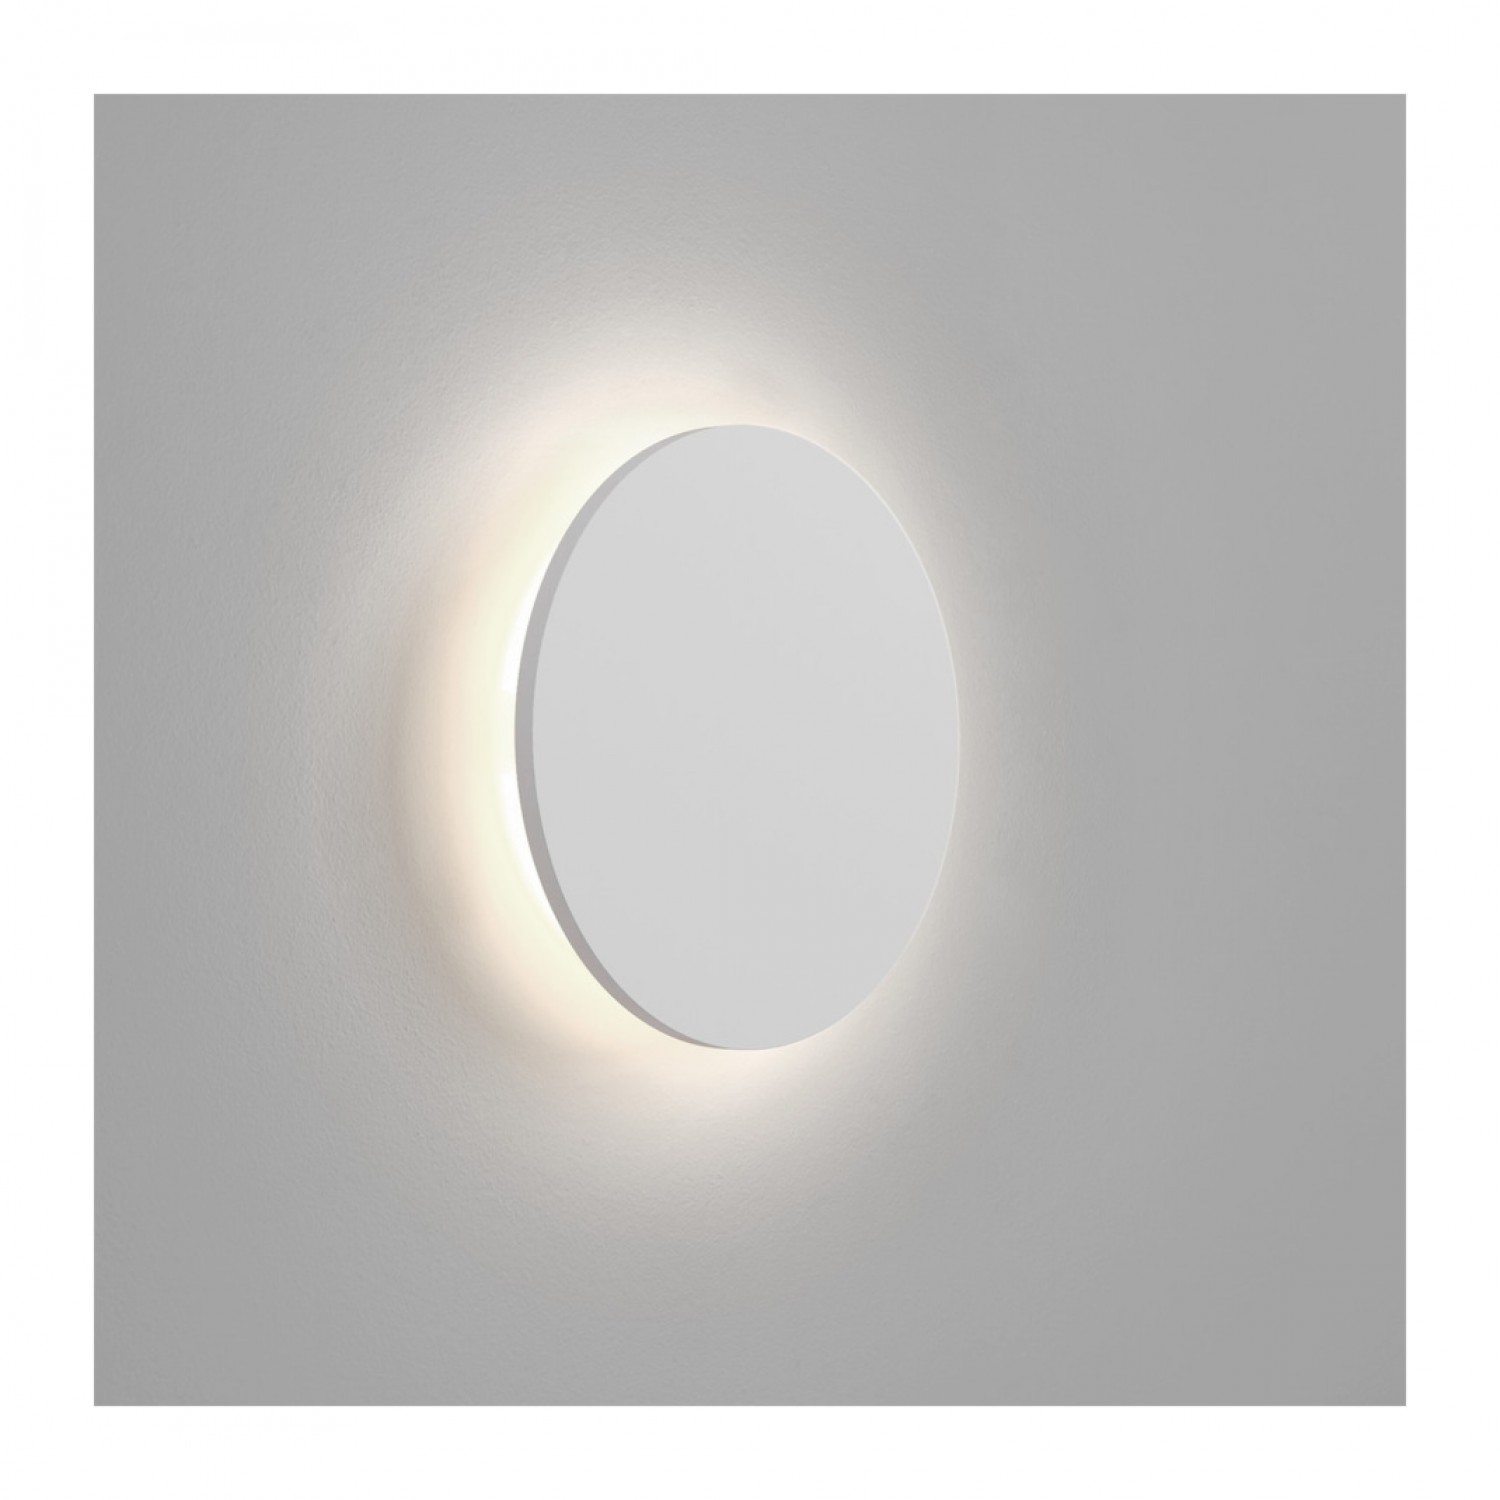 alt_image Бра Astro Eclipse Round 250 LED 2700K  1333019